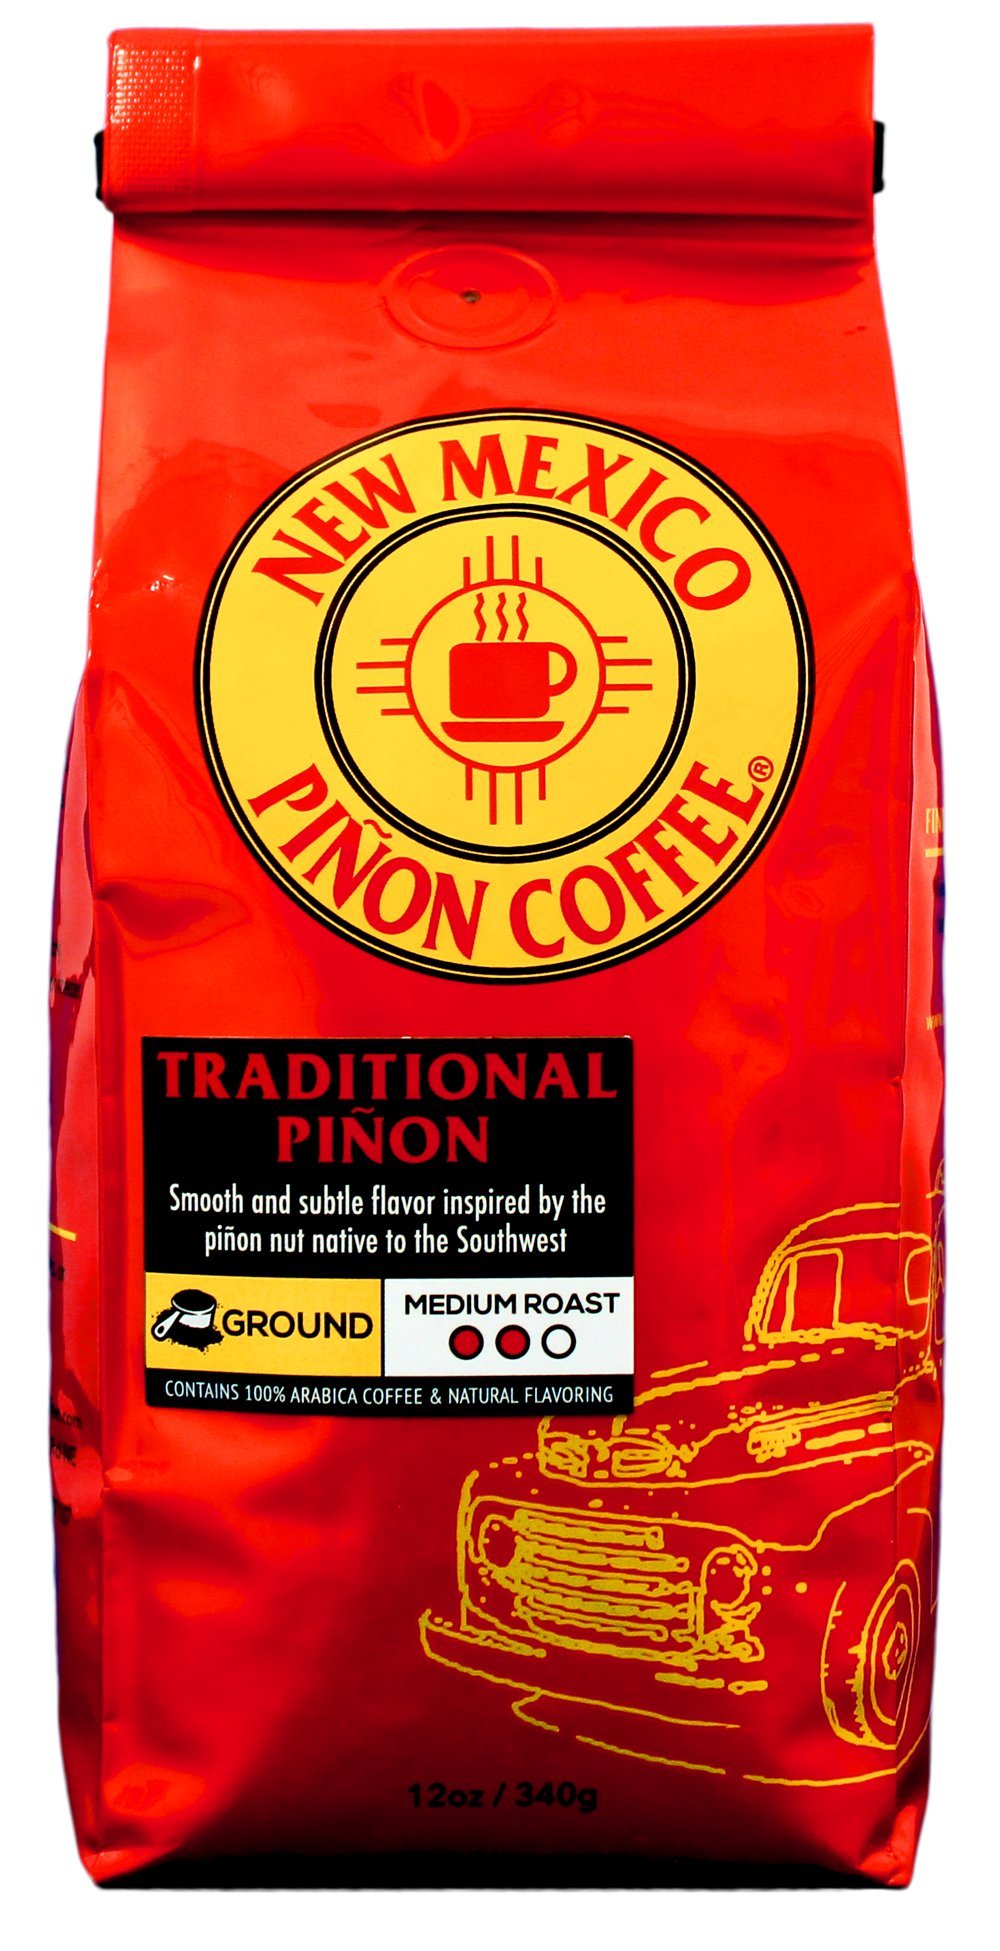 New Mexico Piñon Coffee Naturally Flavored Coffee (Traditional Piñon Ground, 12 ounce)